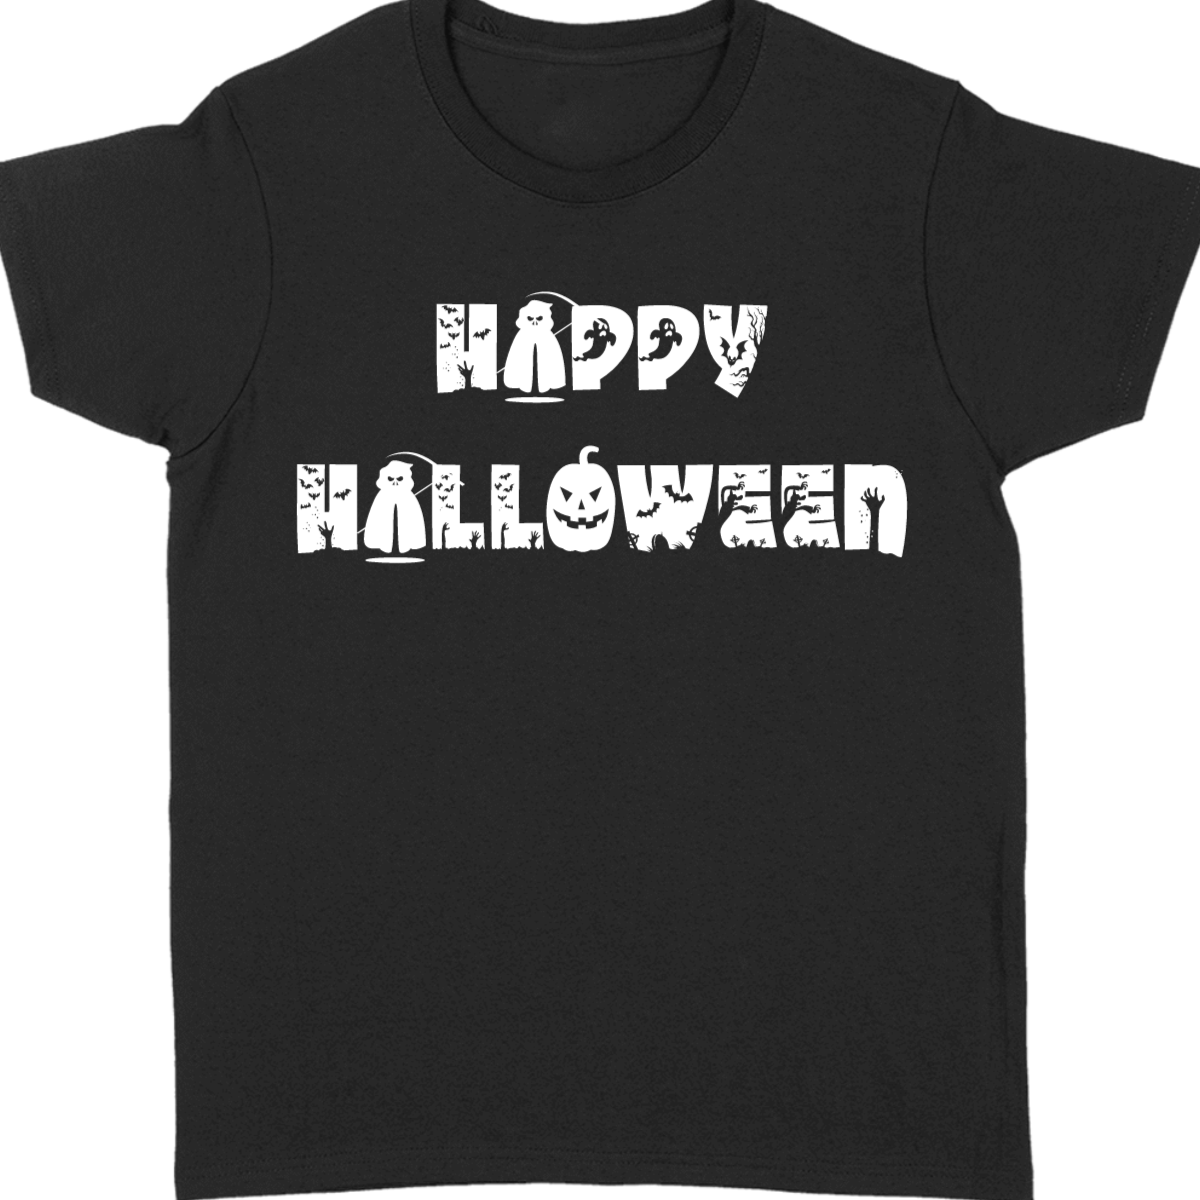 GeckoCustom Personalized Custom T Shirt, Apparel For Halloween, Custom Text Unisex T Shirt / Orange / S